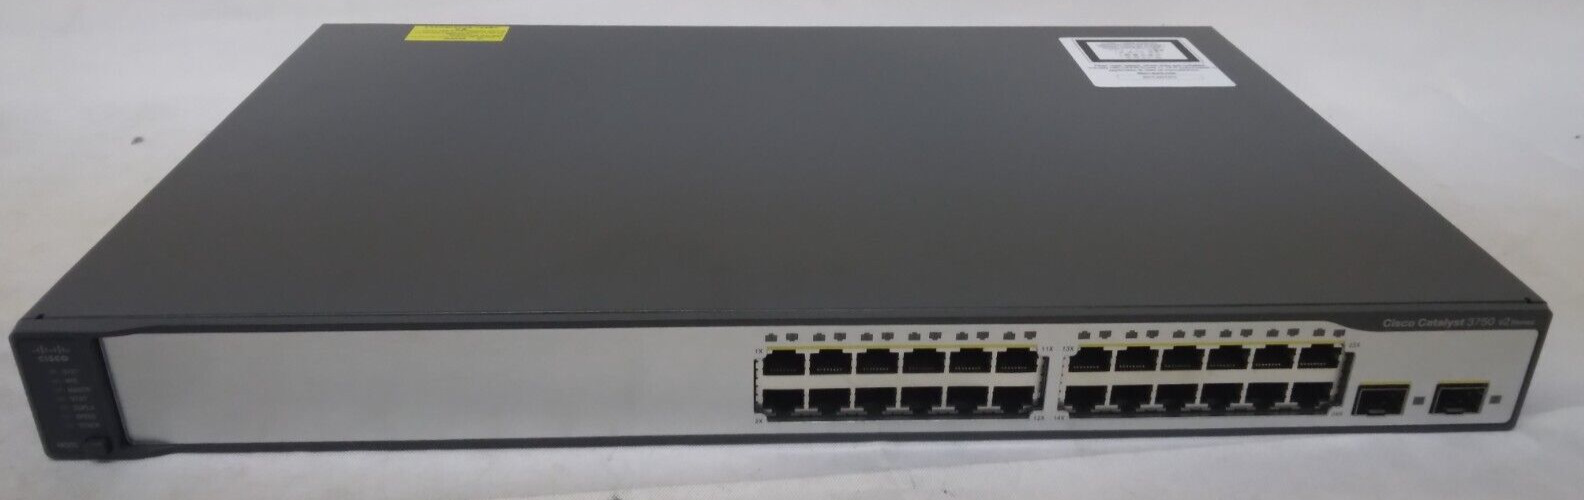 Cisco Catalyst 3750 V2 24 Port Gigabit Switch WS-C3750V2-24TS-S Tested